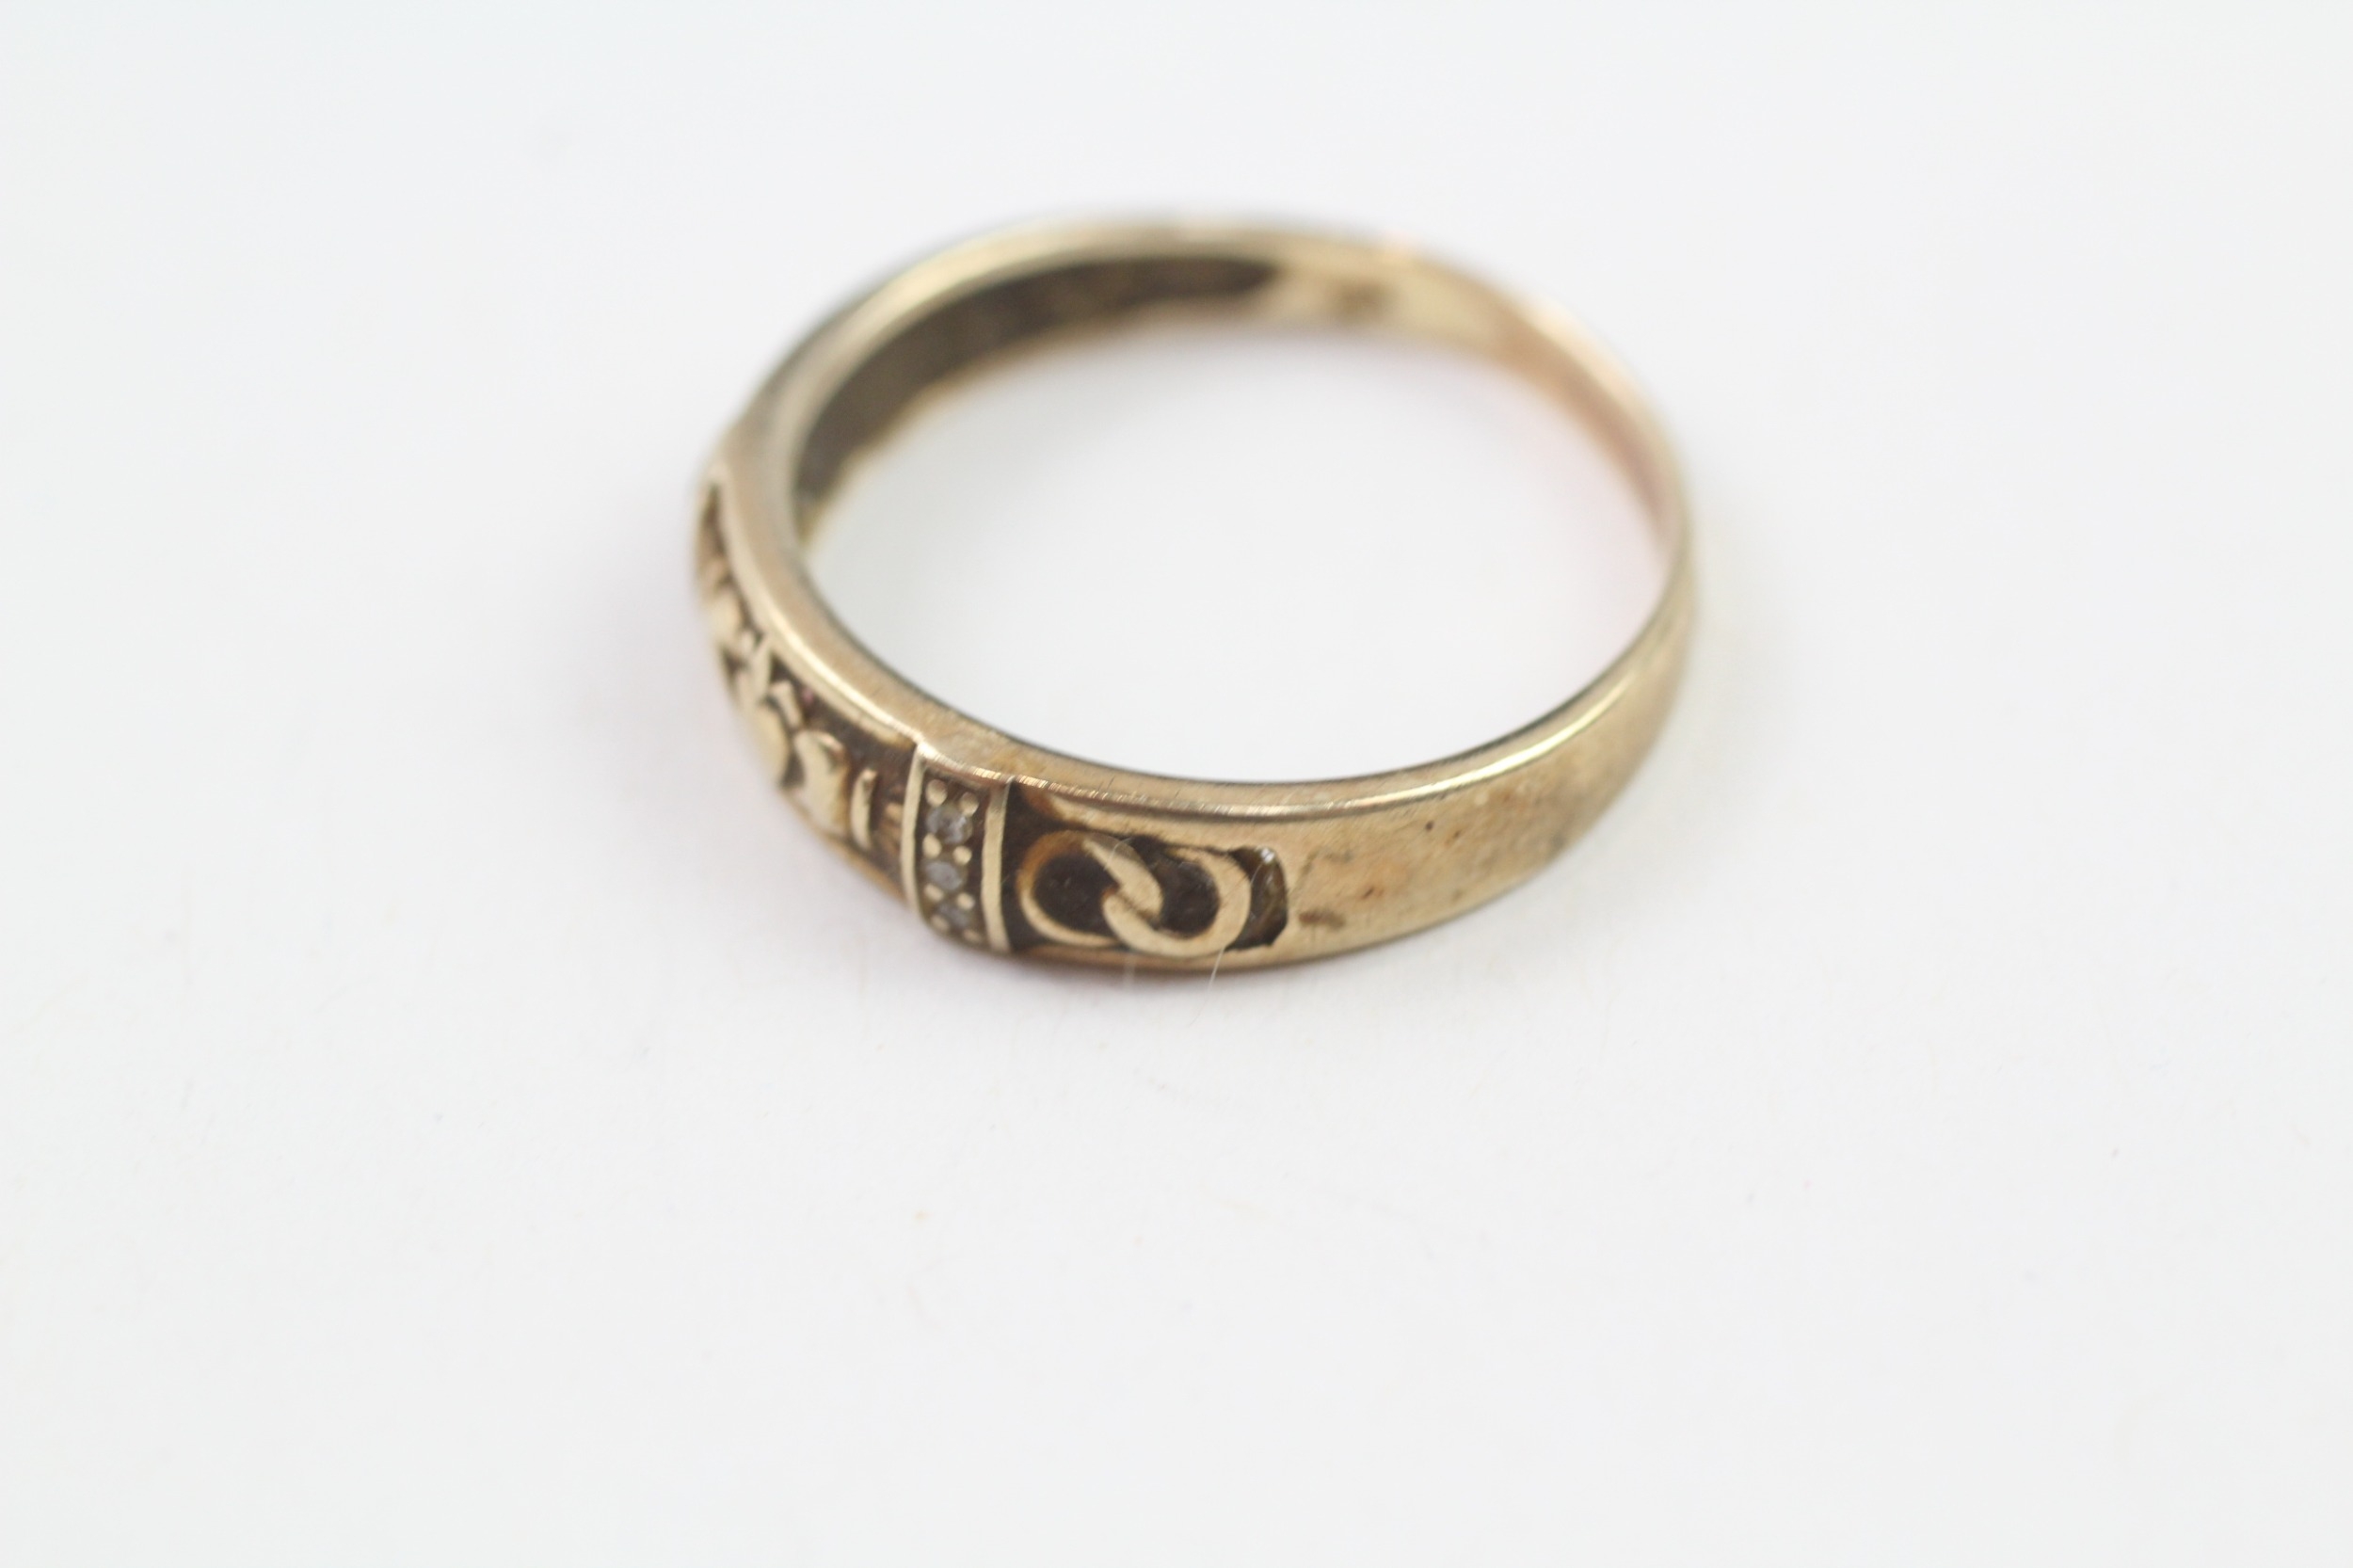 9ct gold diamond Irish claddah ring with a celtic pattern (2g) - Image 3 of 6